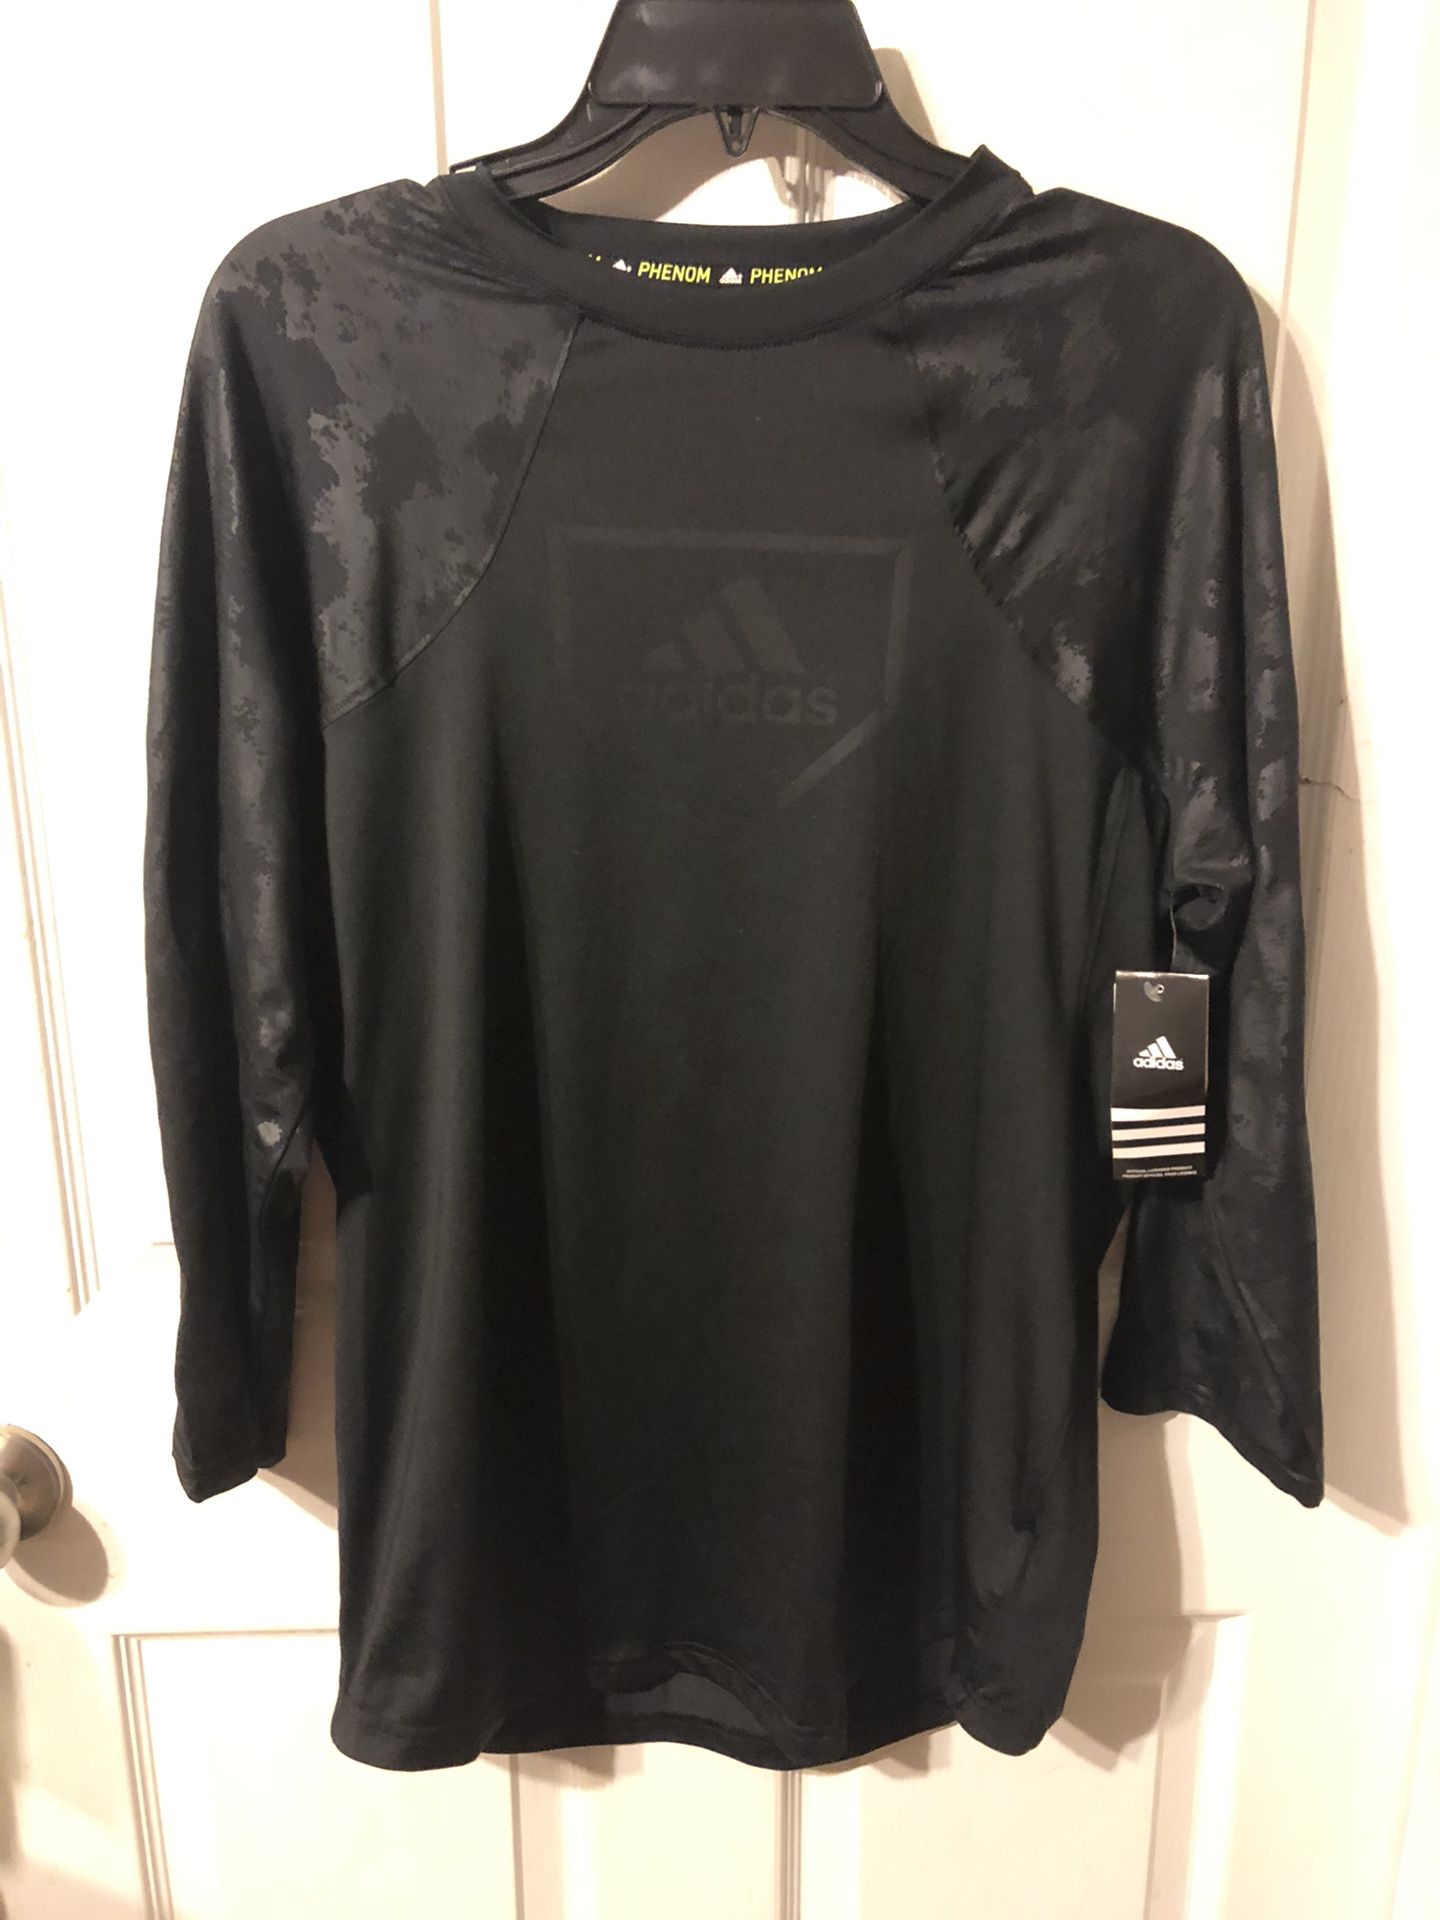 NEW Men’s Black Adidas Activewear Size M